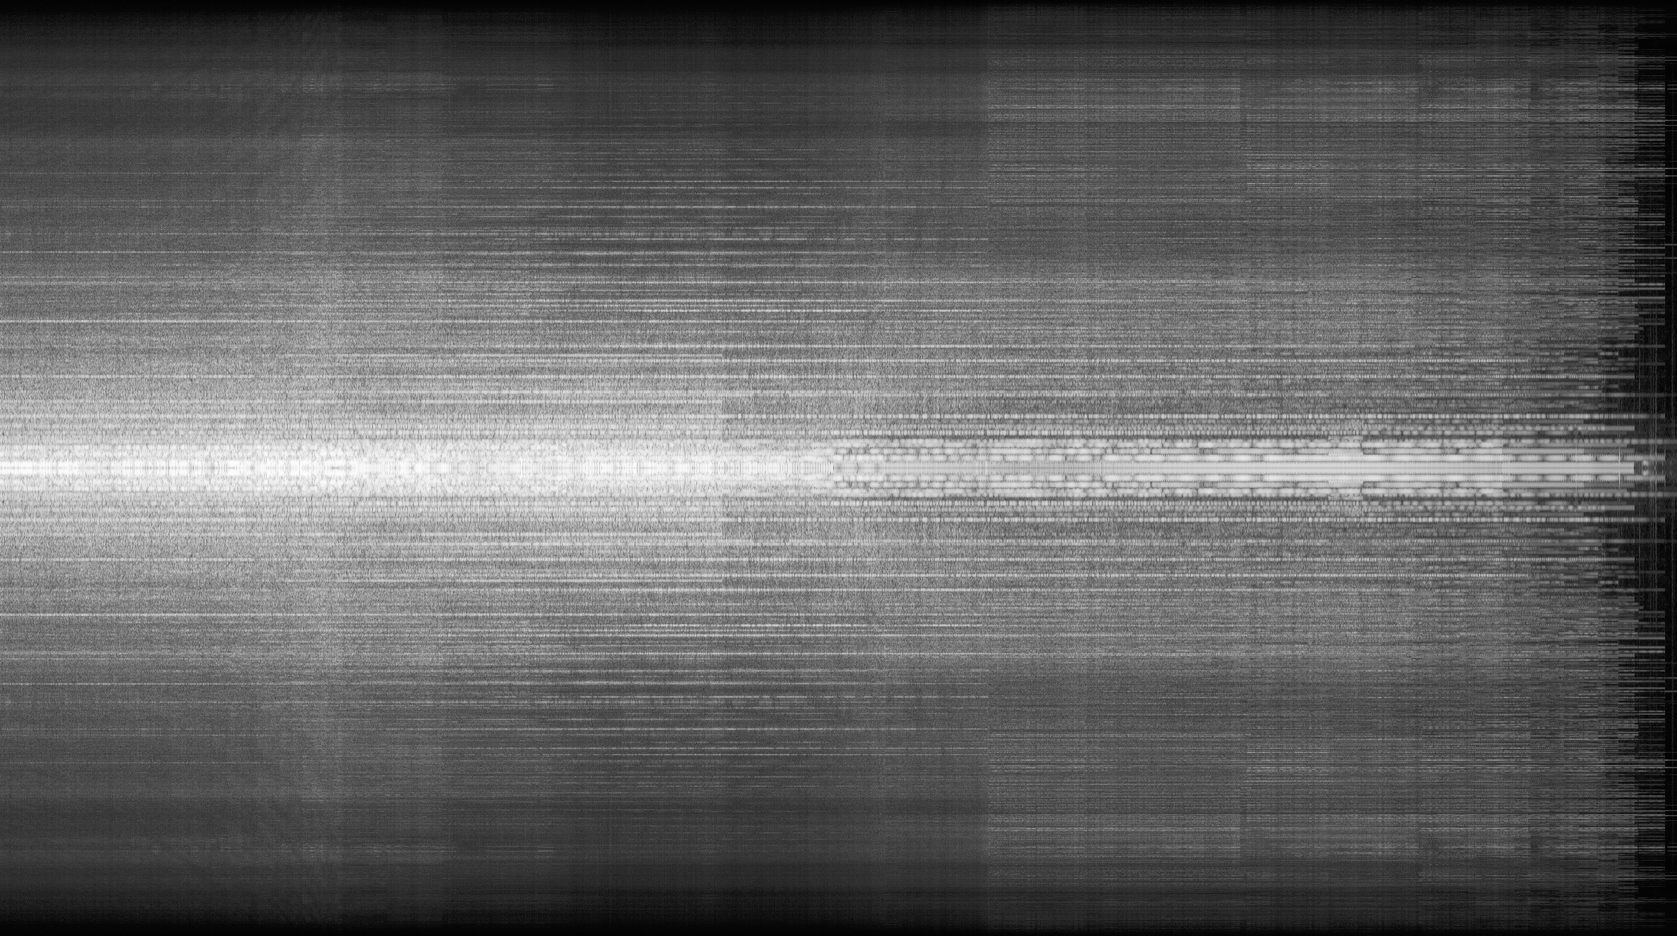 Background image of a spectrogram pattern